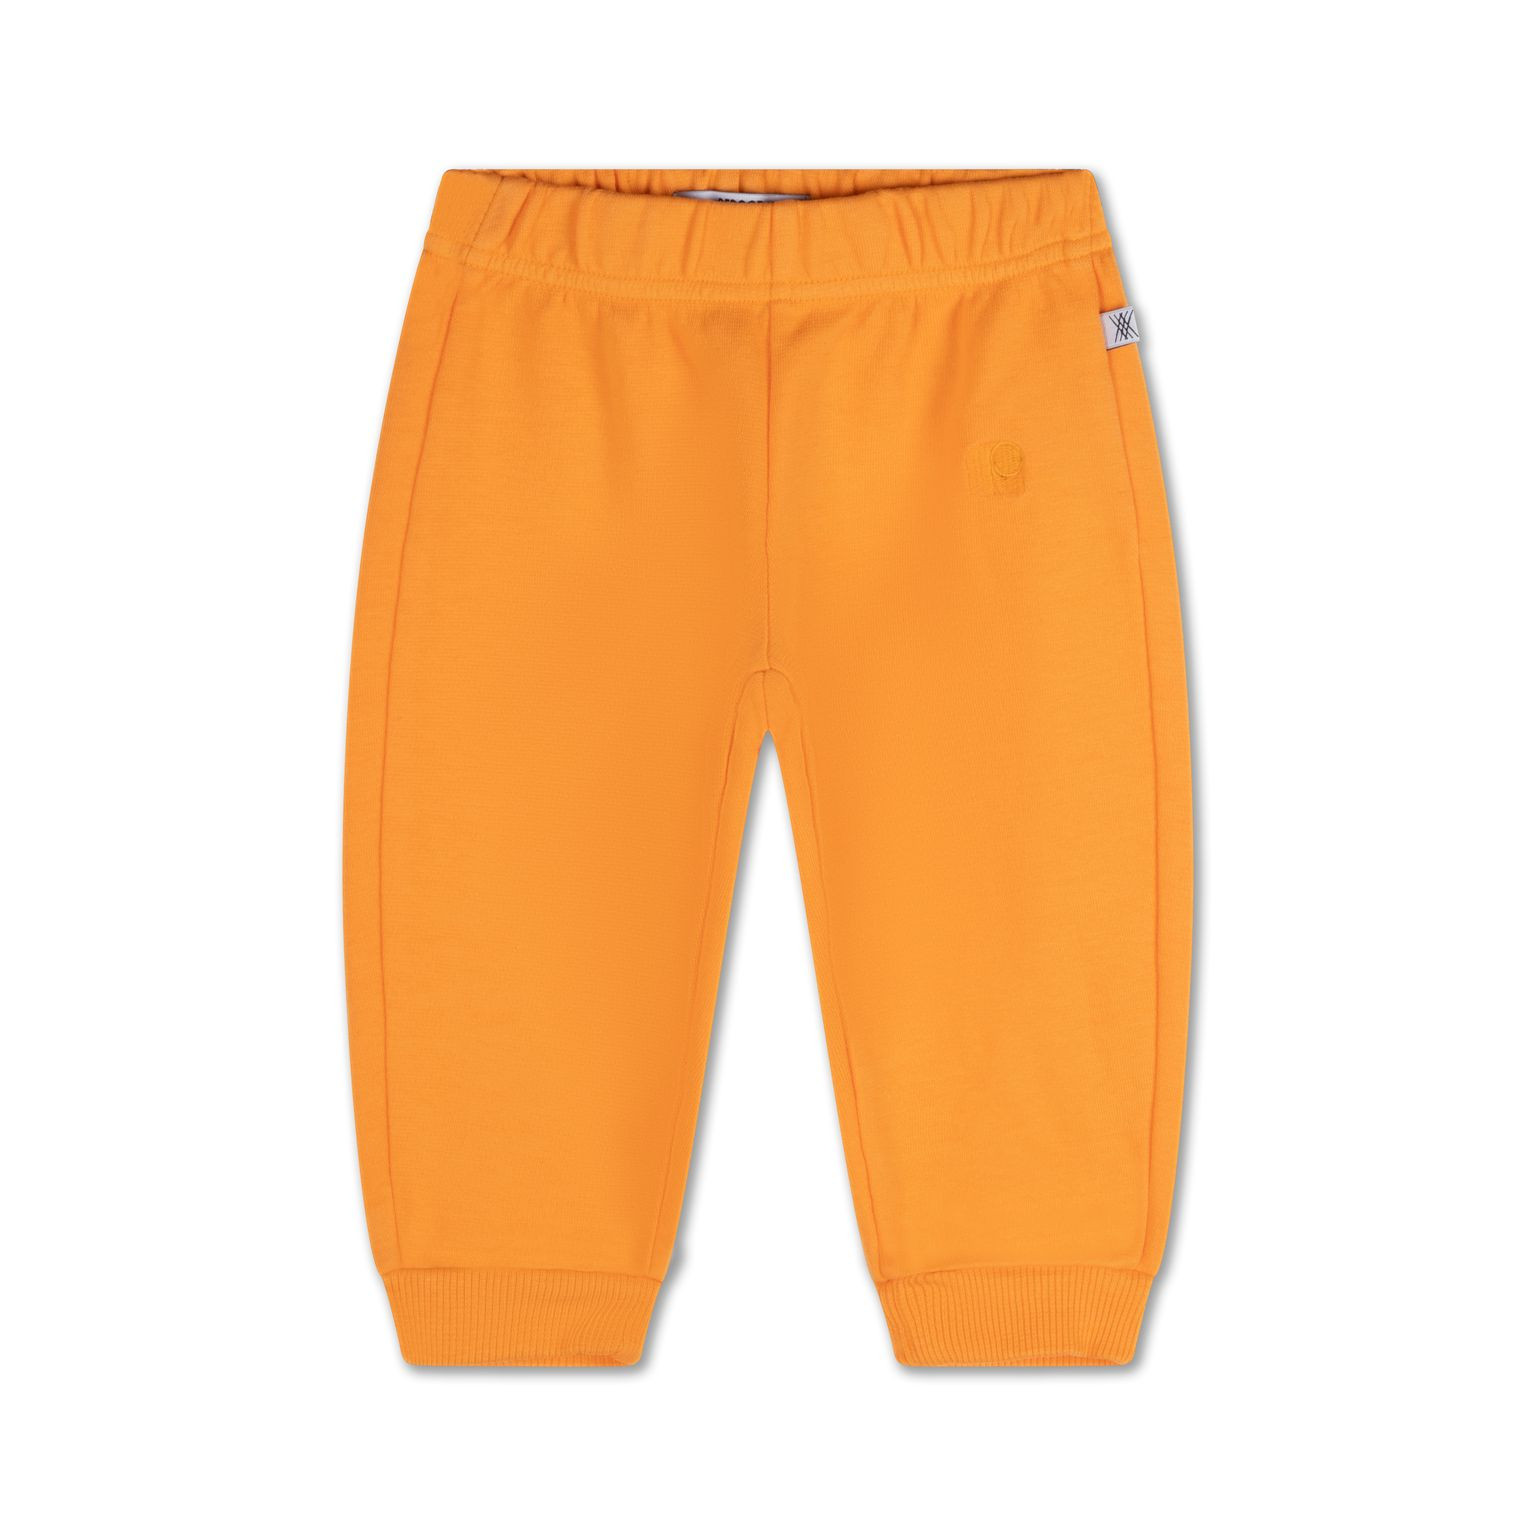 Glory Orange - Pantalon